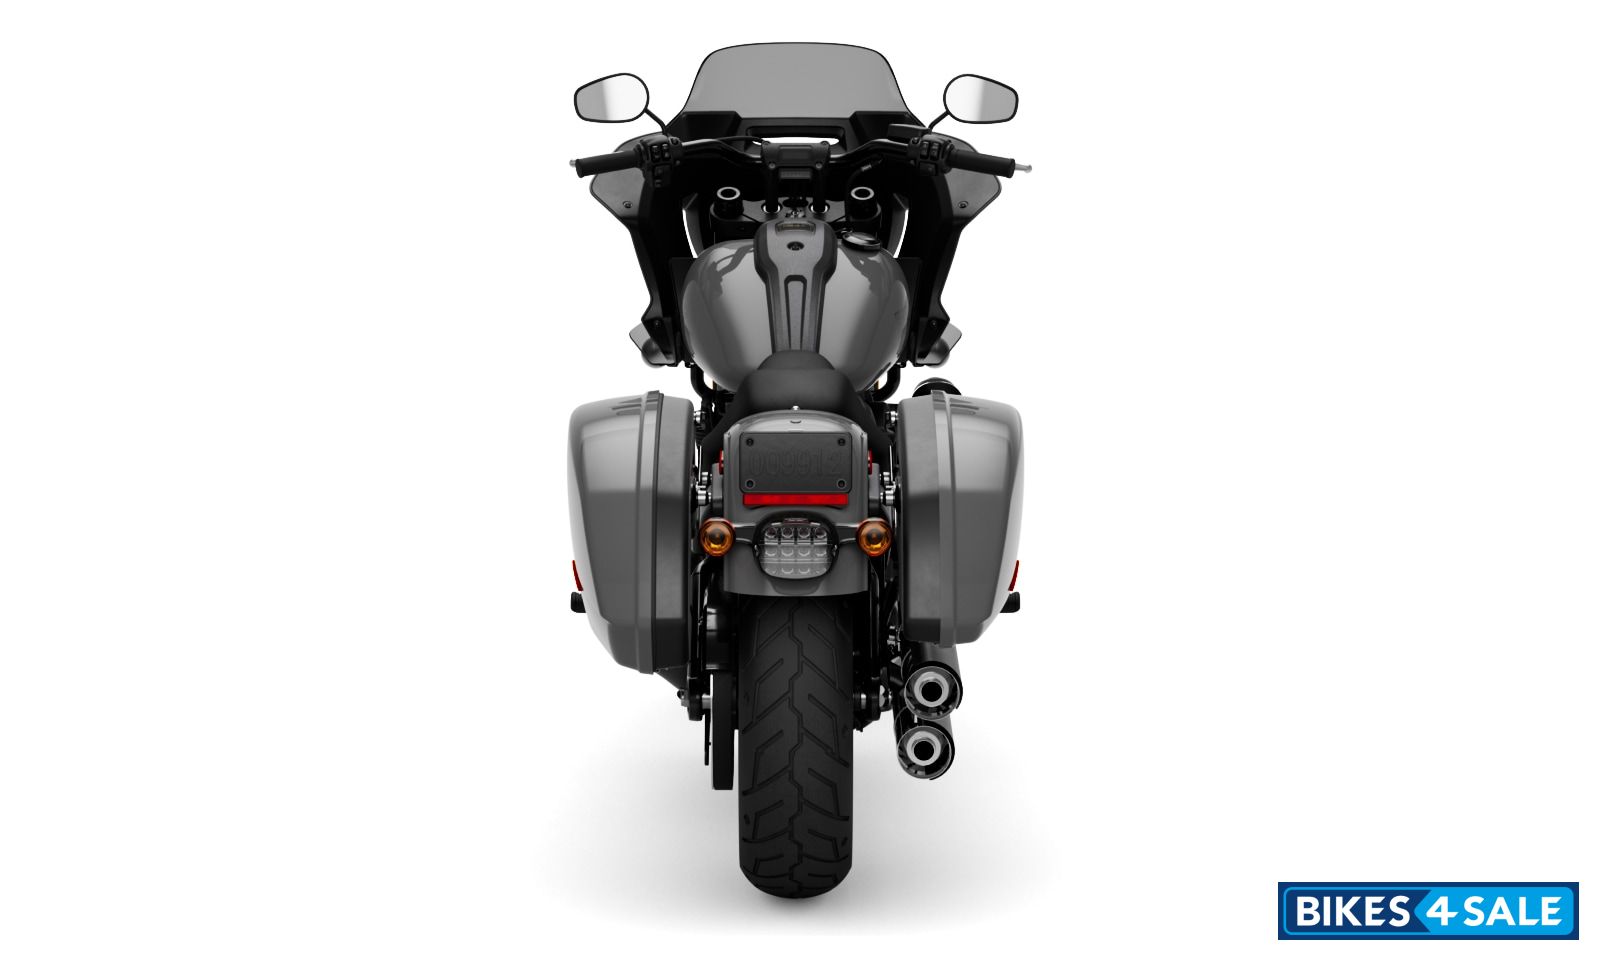 Harley Davidson 2022 Low Rider ST